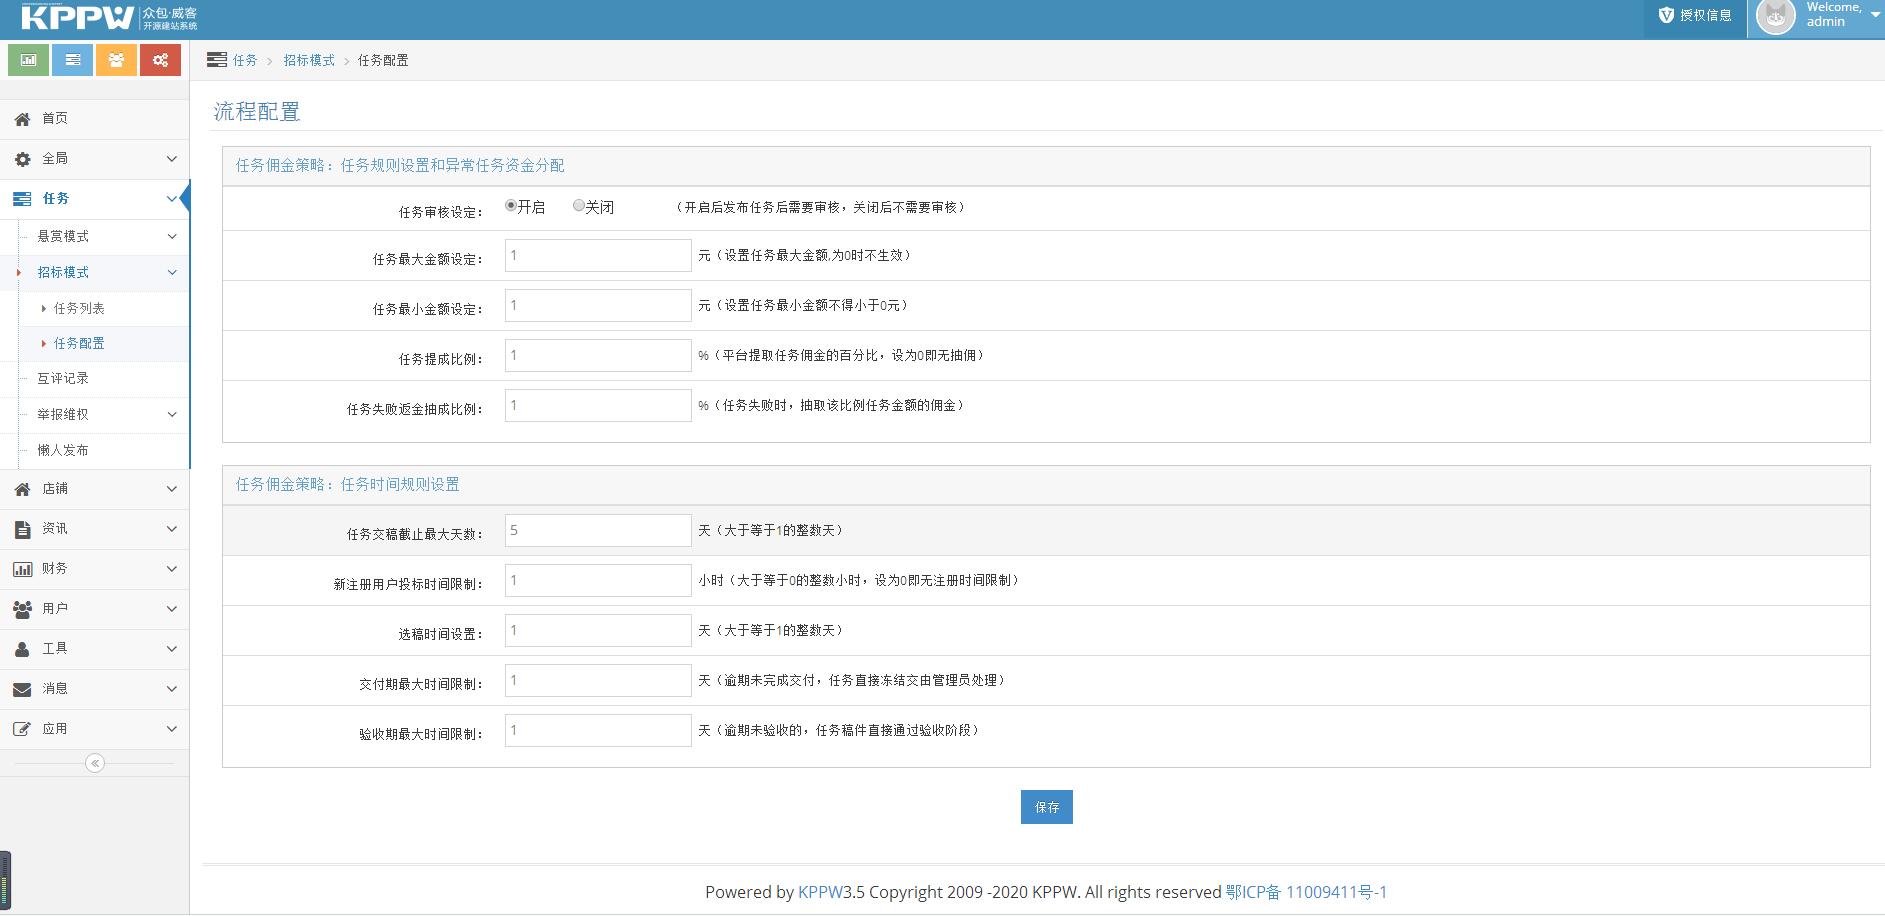 KPPW客客威客V3.3众包发布任务接单平台源码运营版-米酷主题